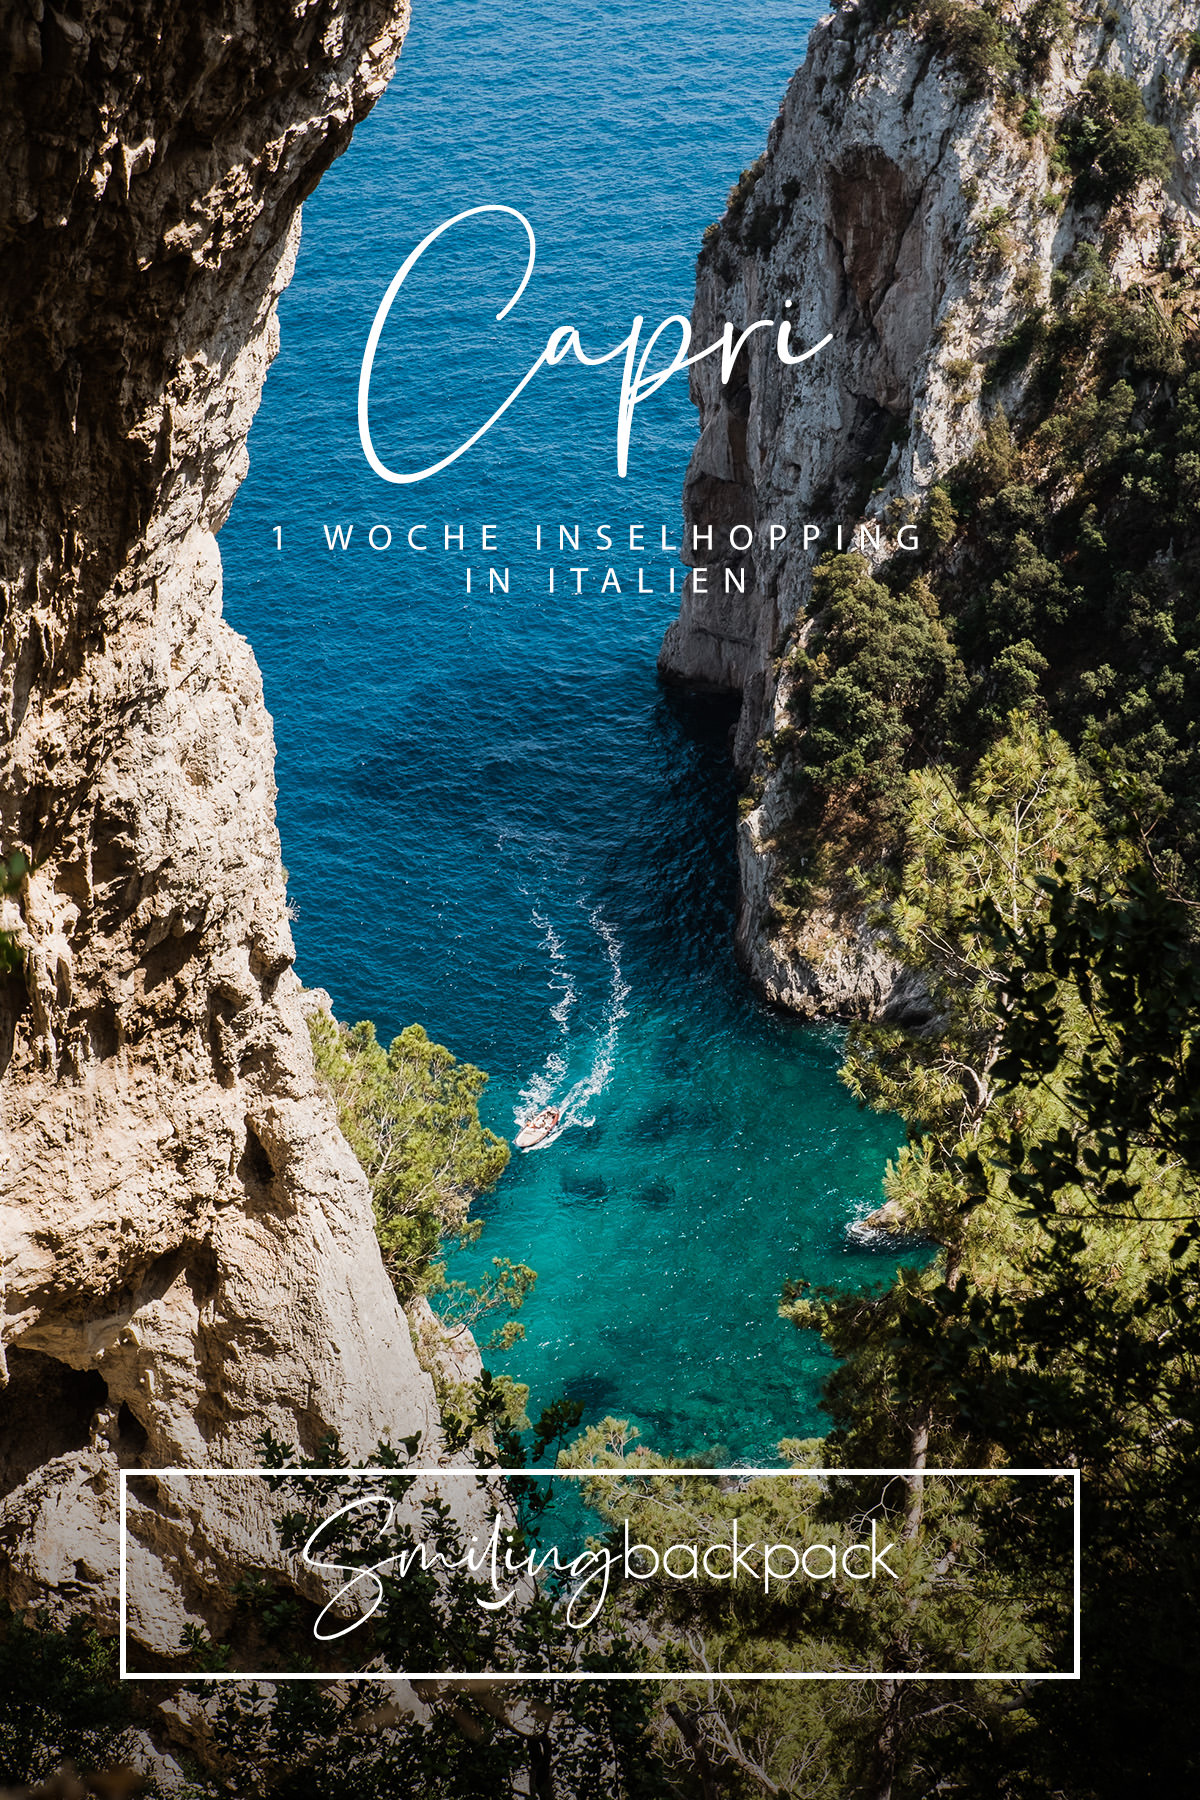 Capri Tipps für Inselhopping in Italien